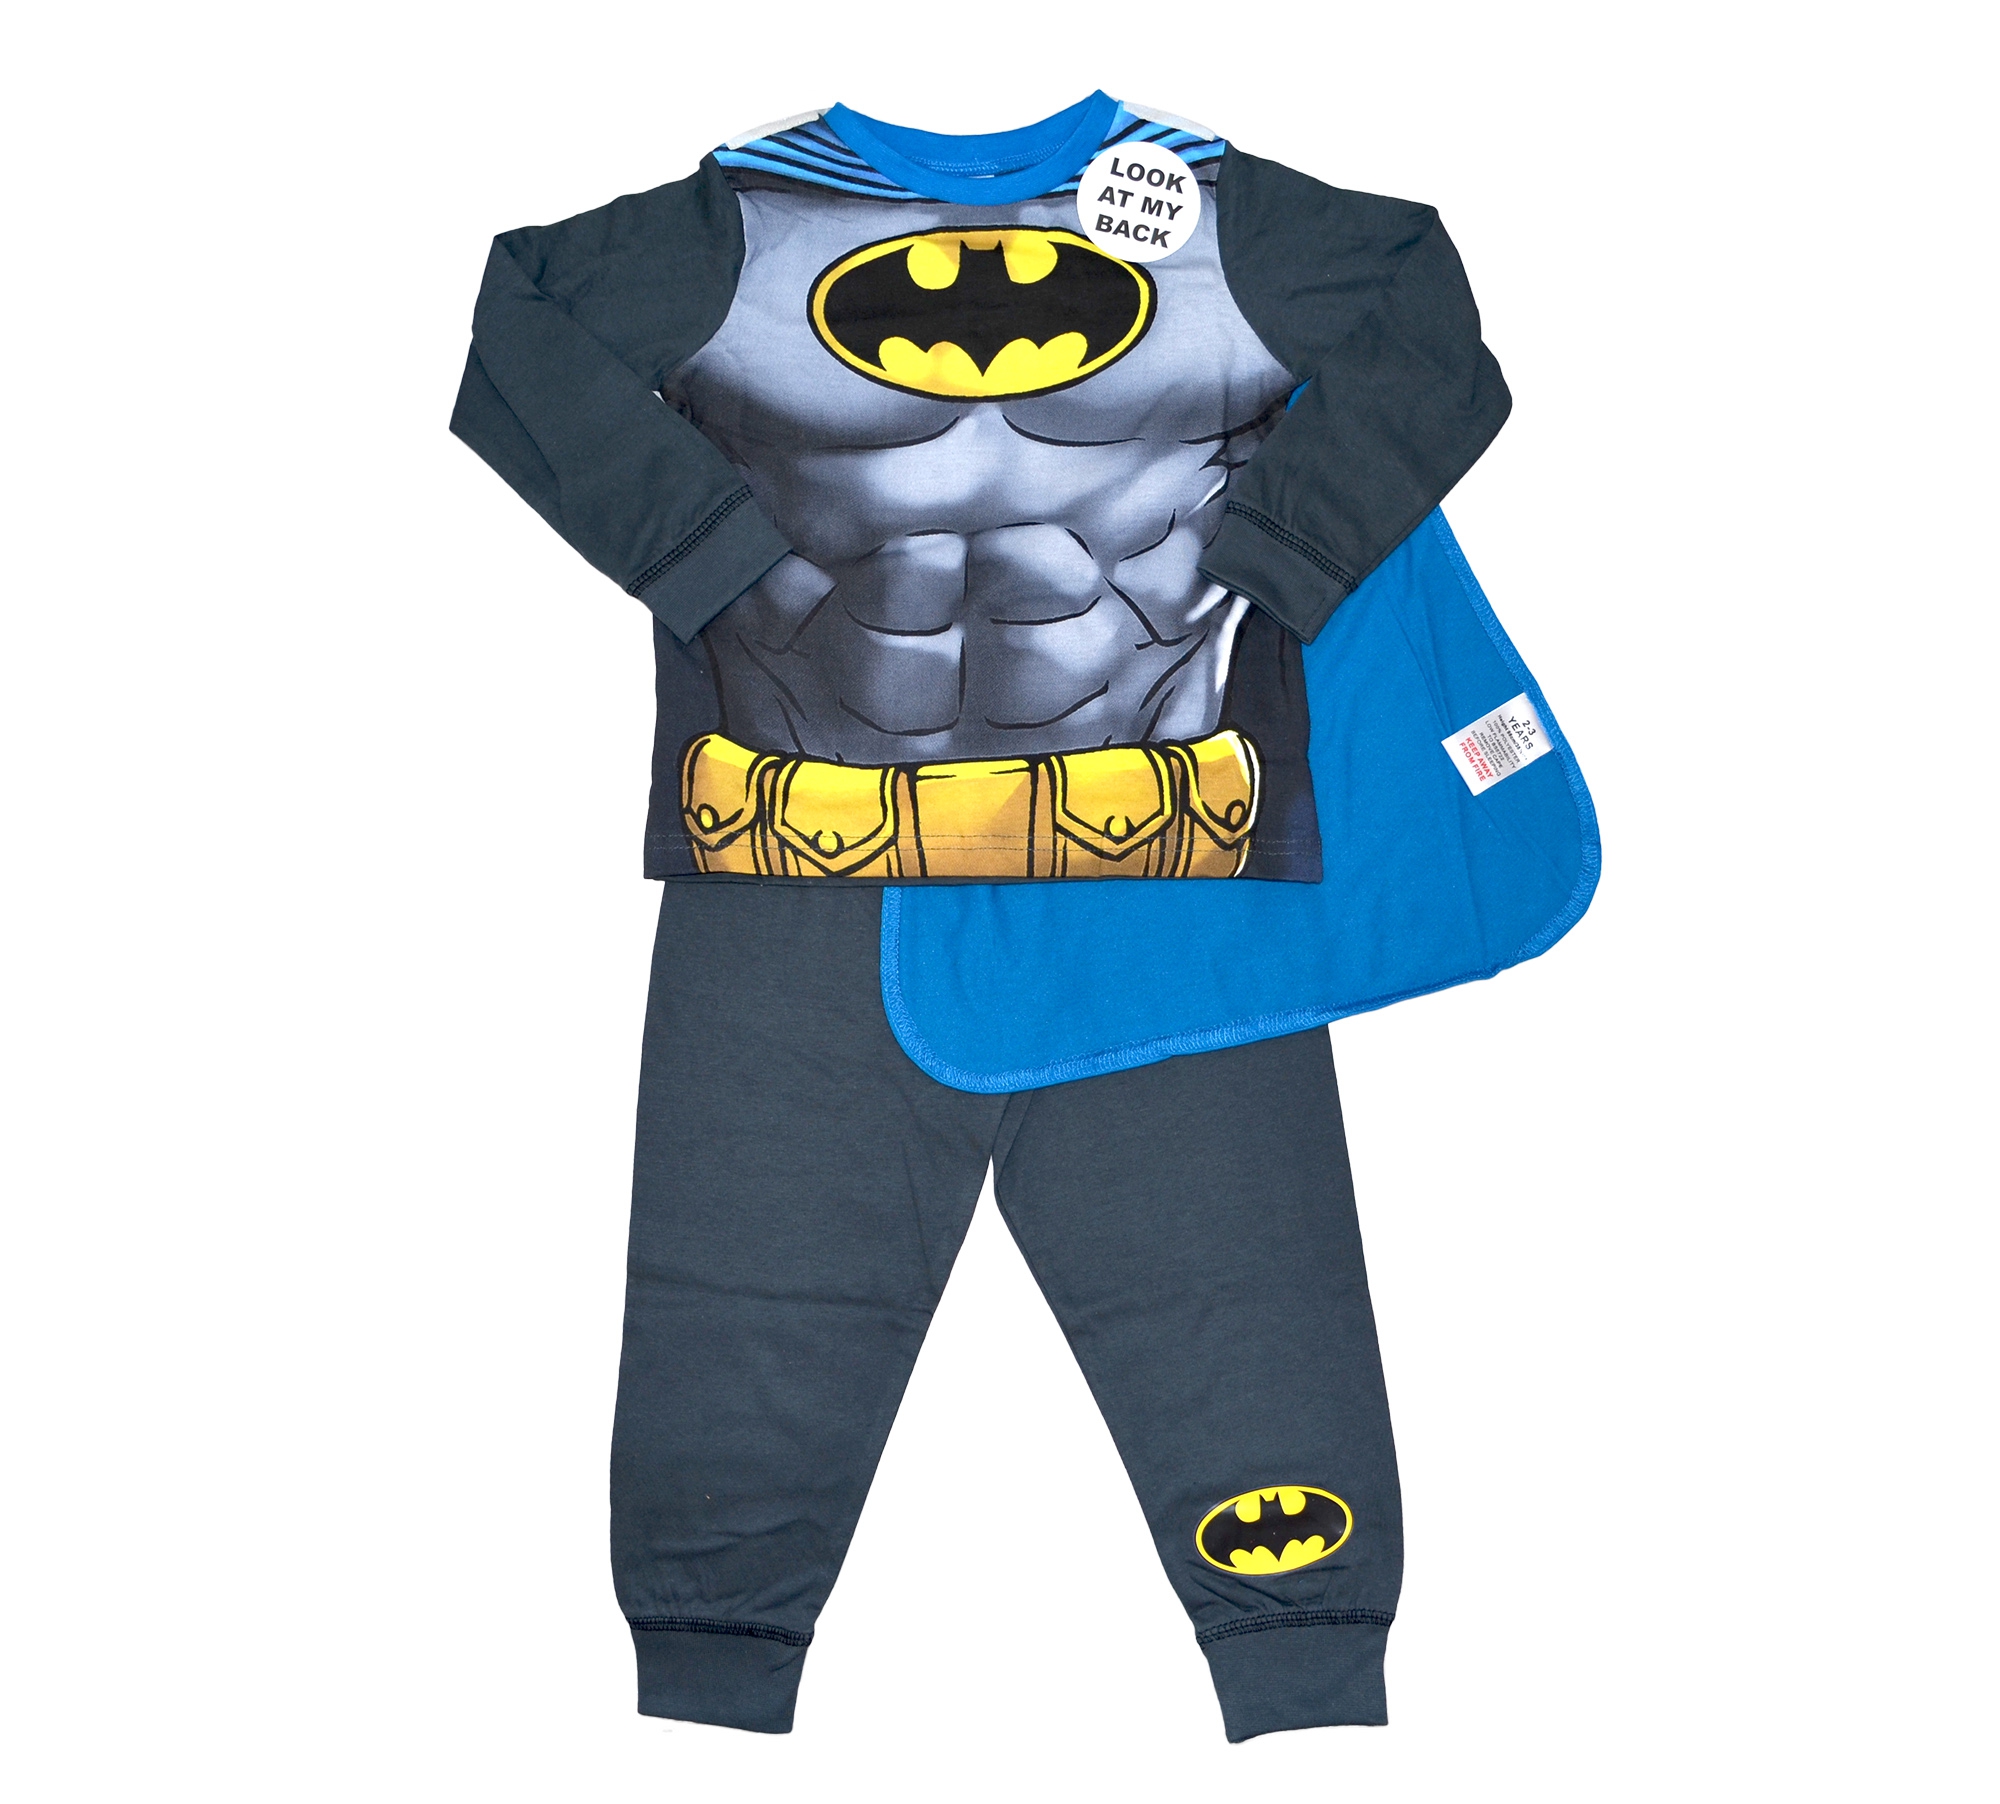 Batman 'Knight' Boys Novelty Pyjama Set 5-6 Years